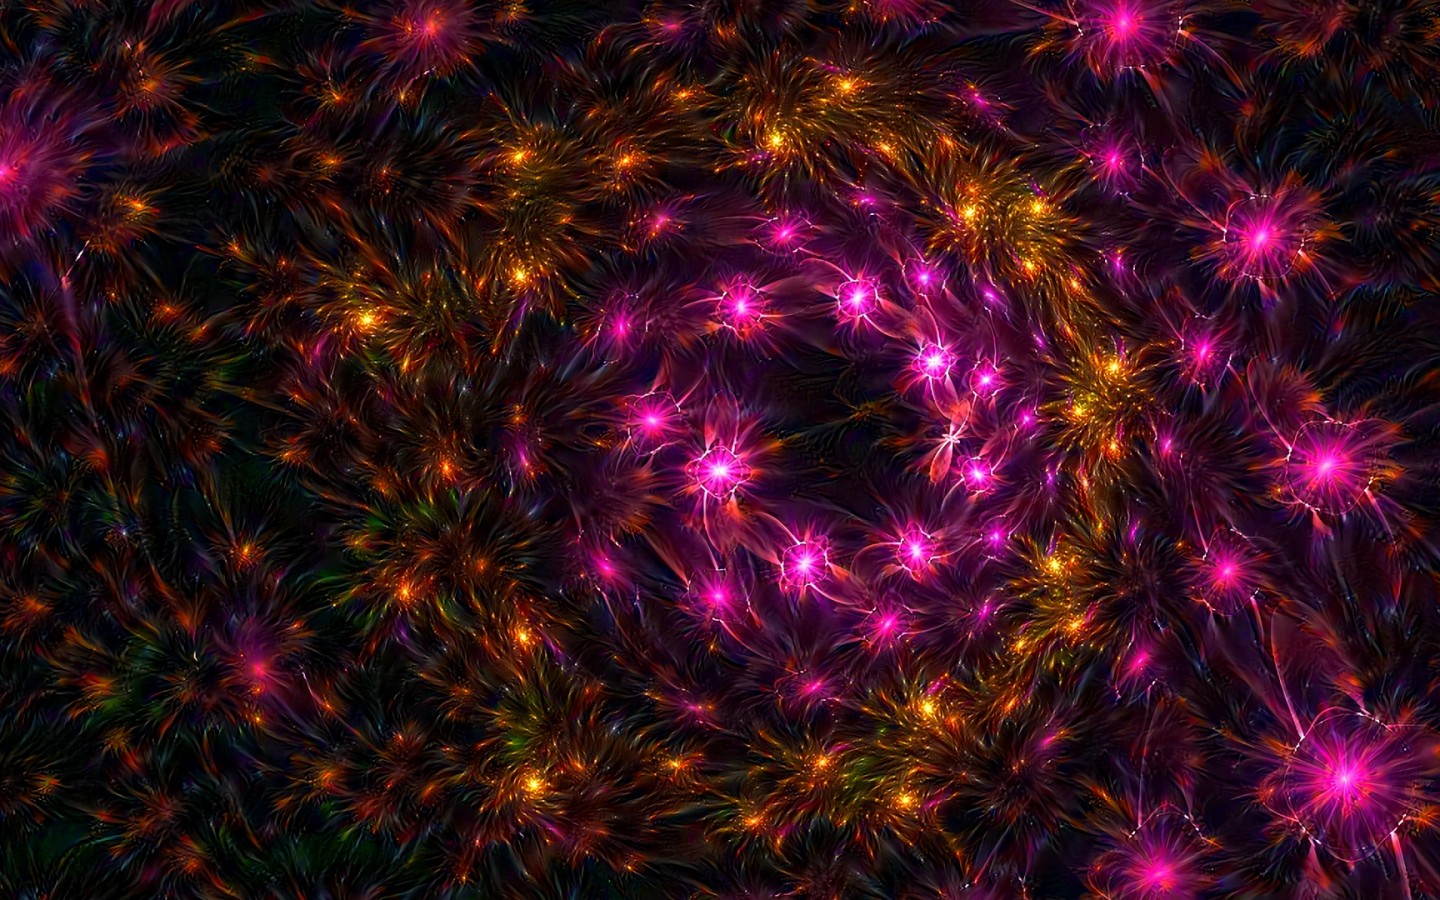 Lilac fractal surface HD Wallpaper